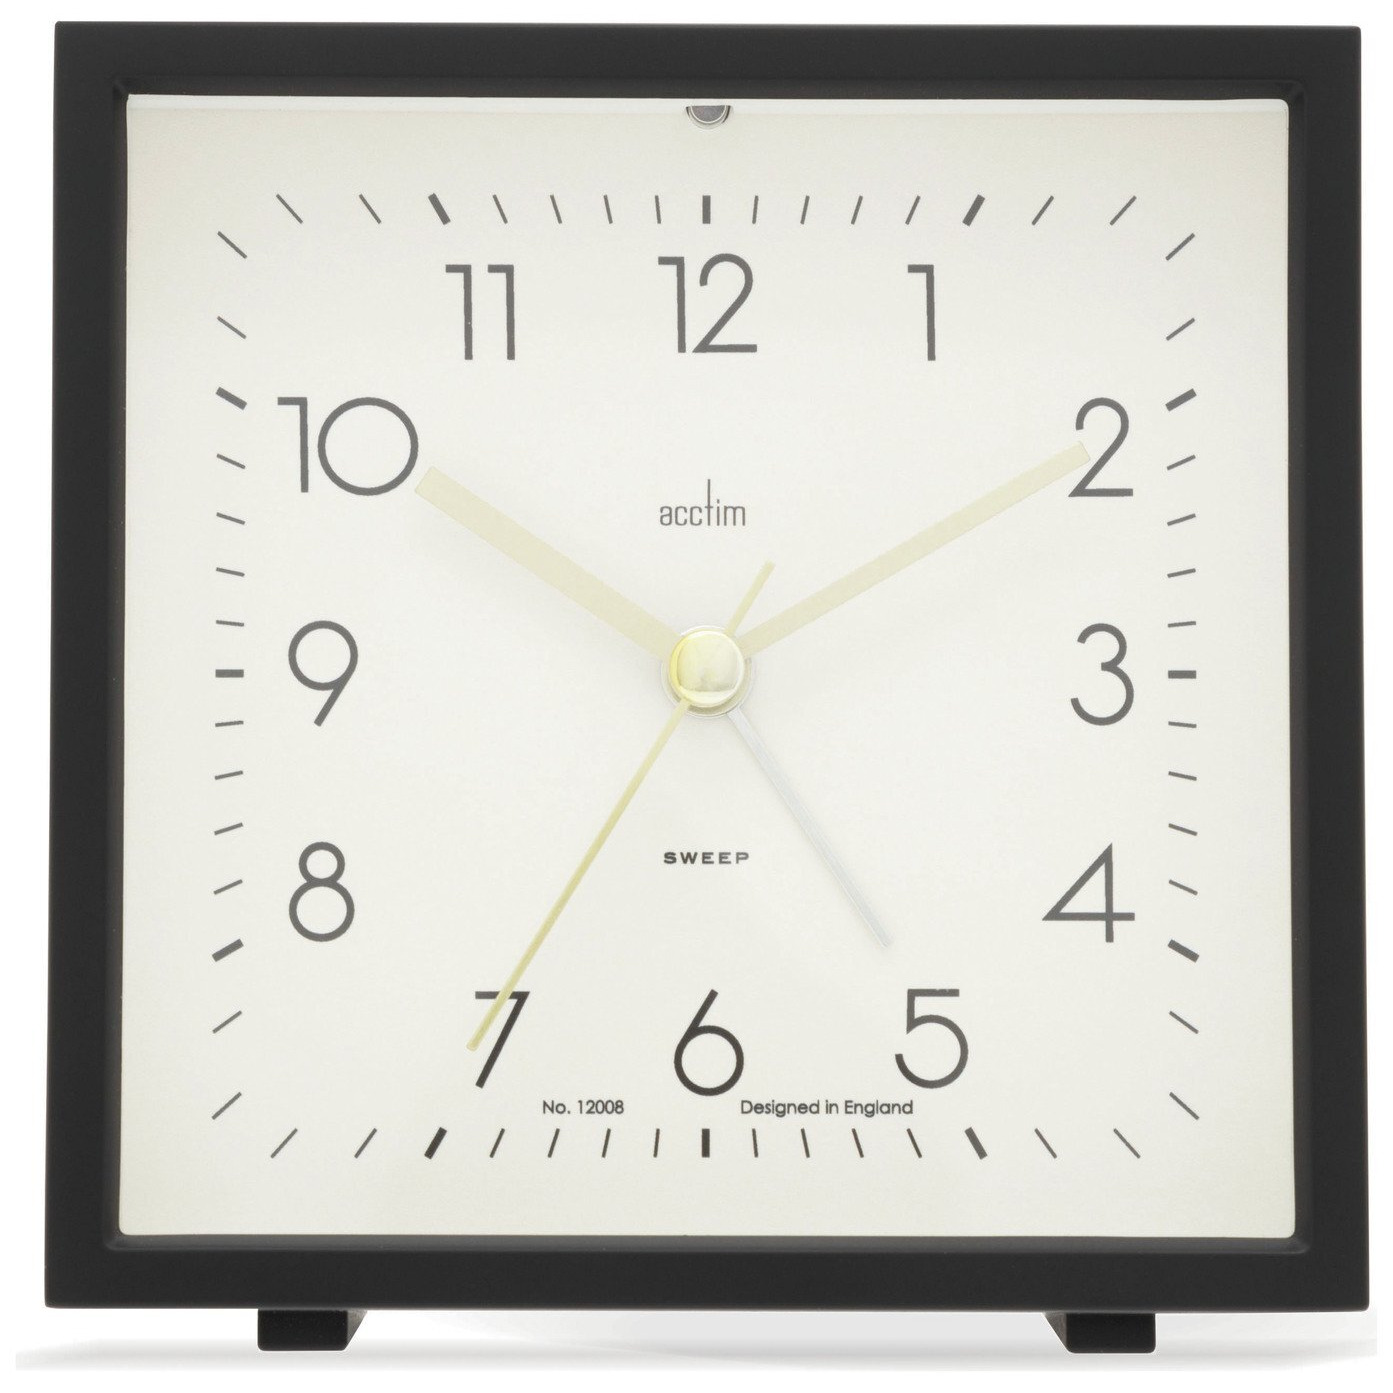 Acctim Heno Analogue Alarm Clock - Black - image 1